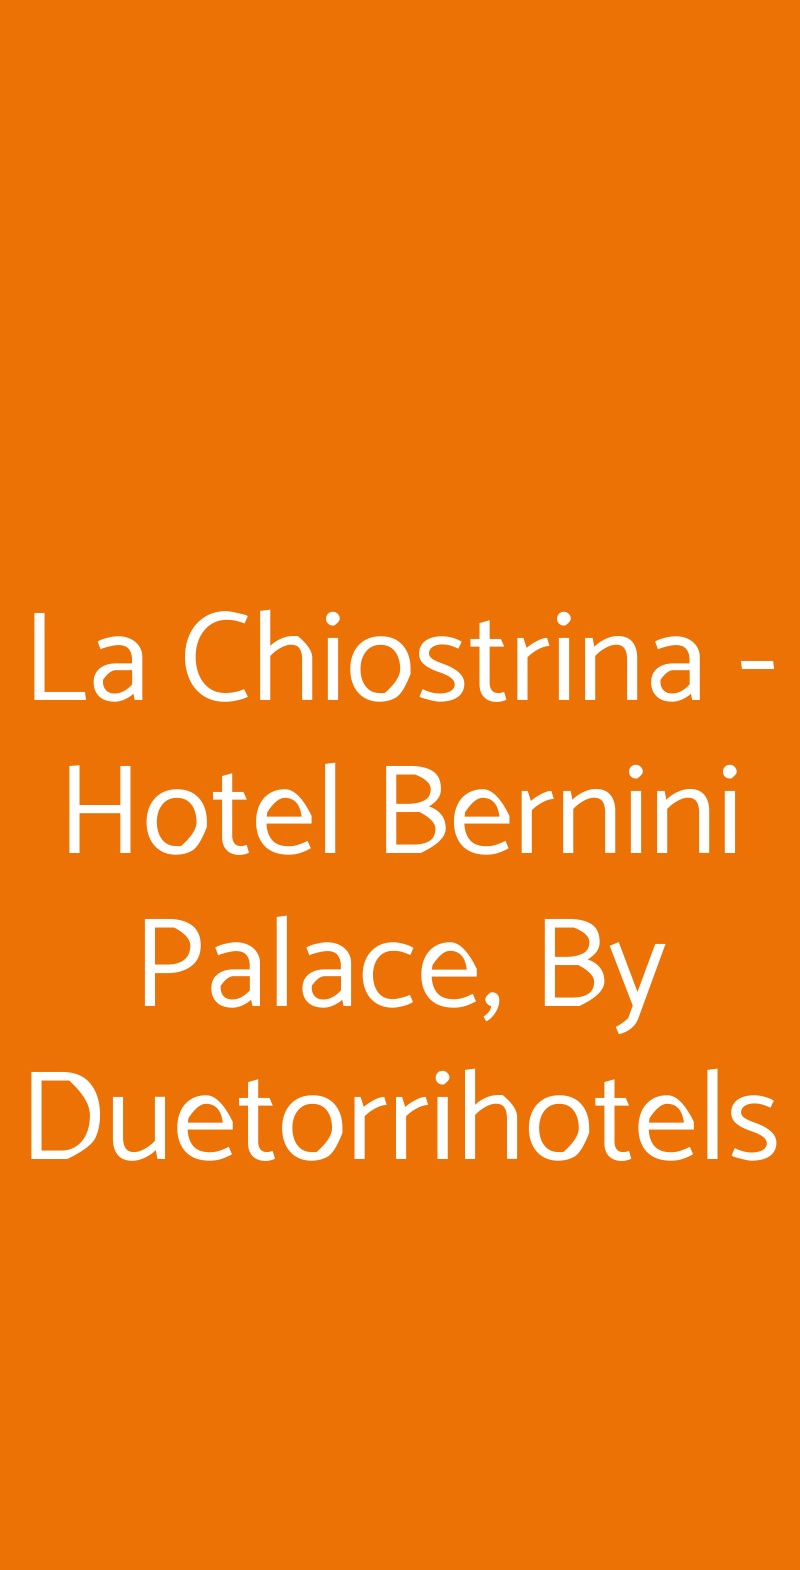 La Chiostrina - Hotel Bernini Palace, By Duetorrihotels Firenze menù 1 pagina